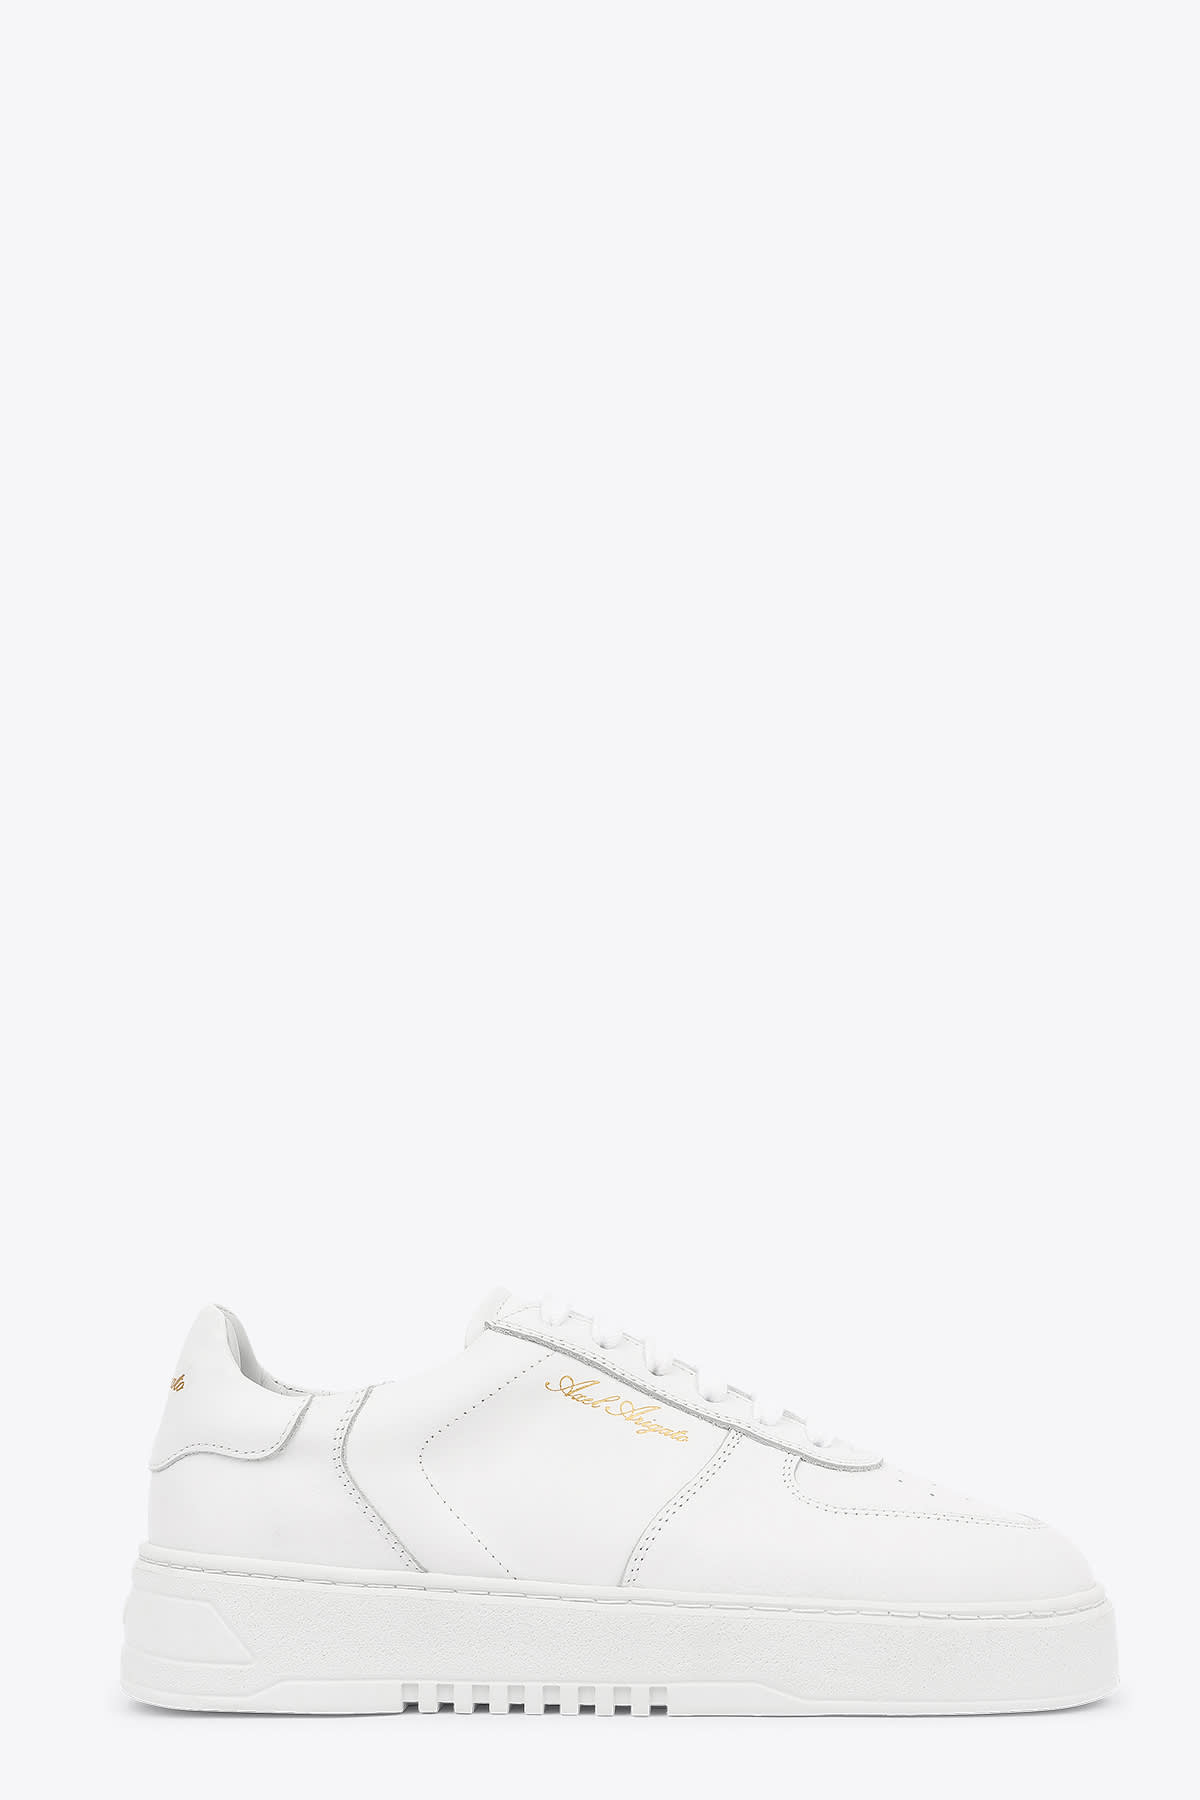 Axel Arigato Orbit White leather low top lace-up sneaker - Orbit